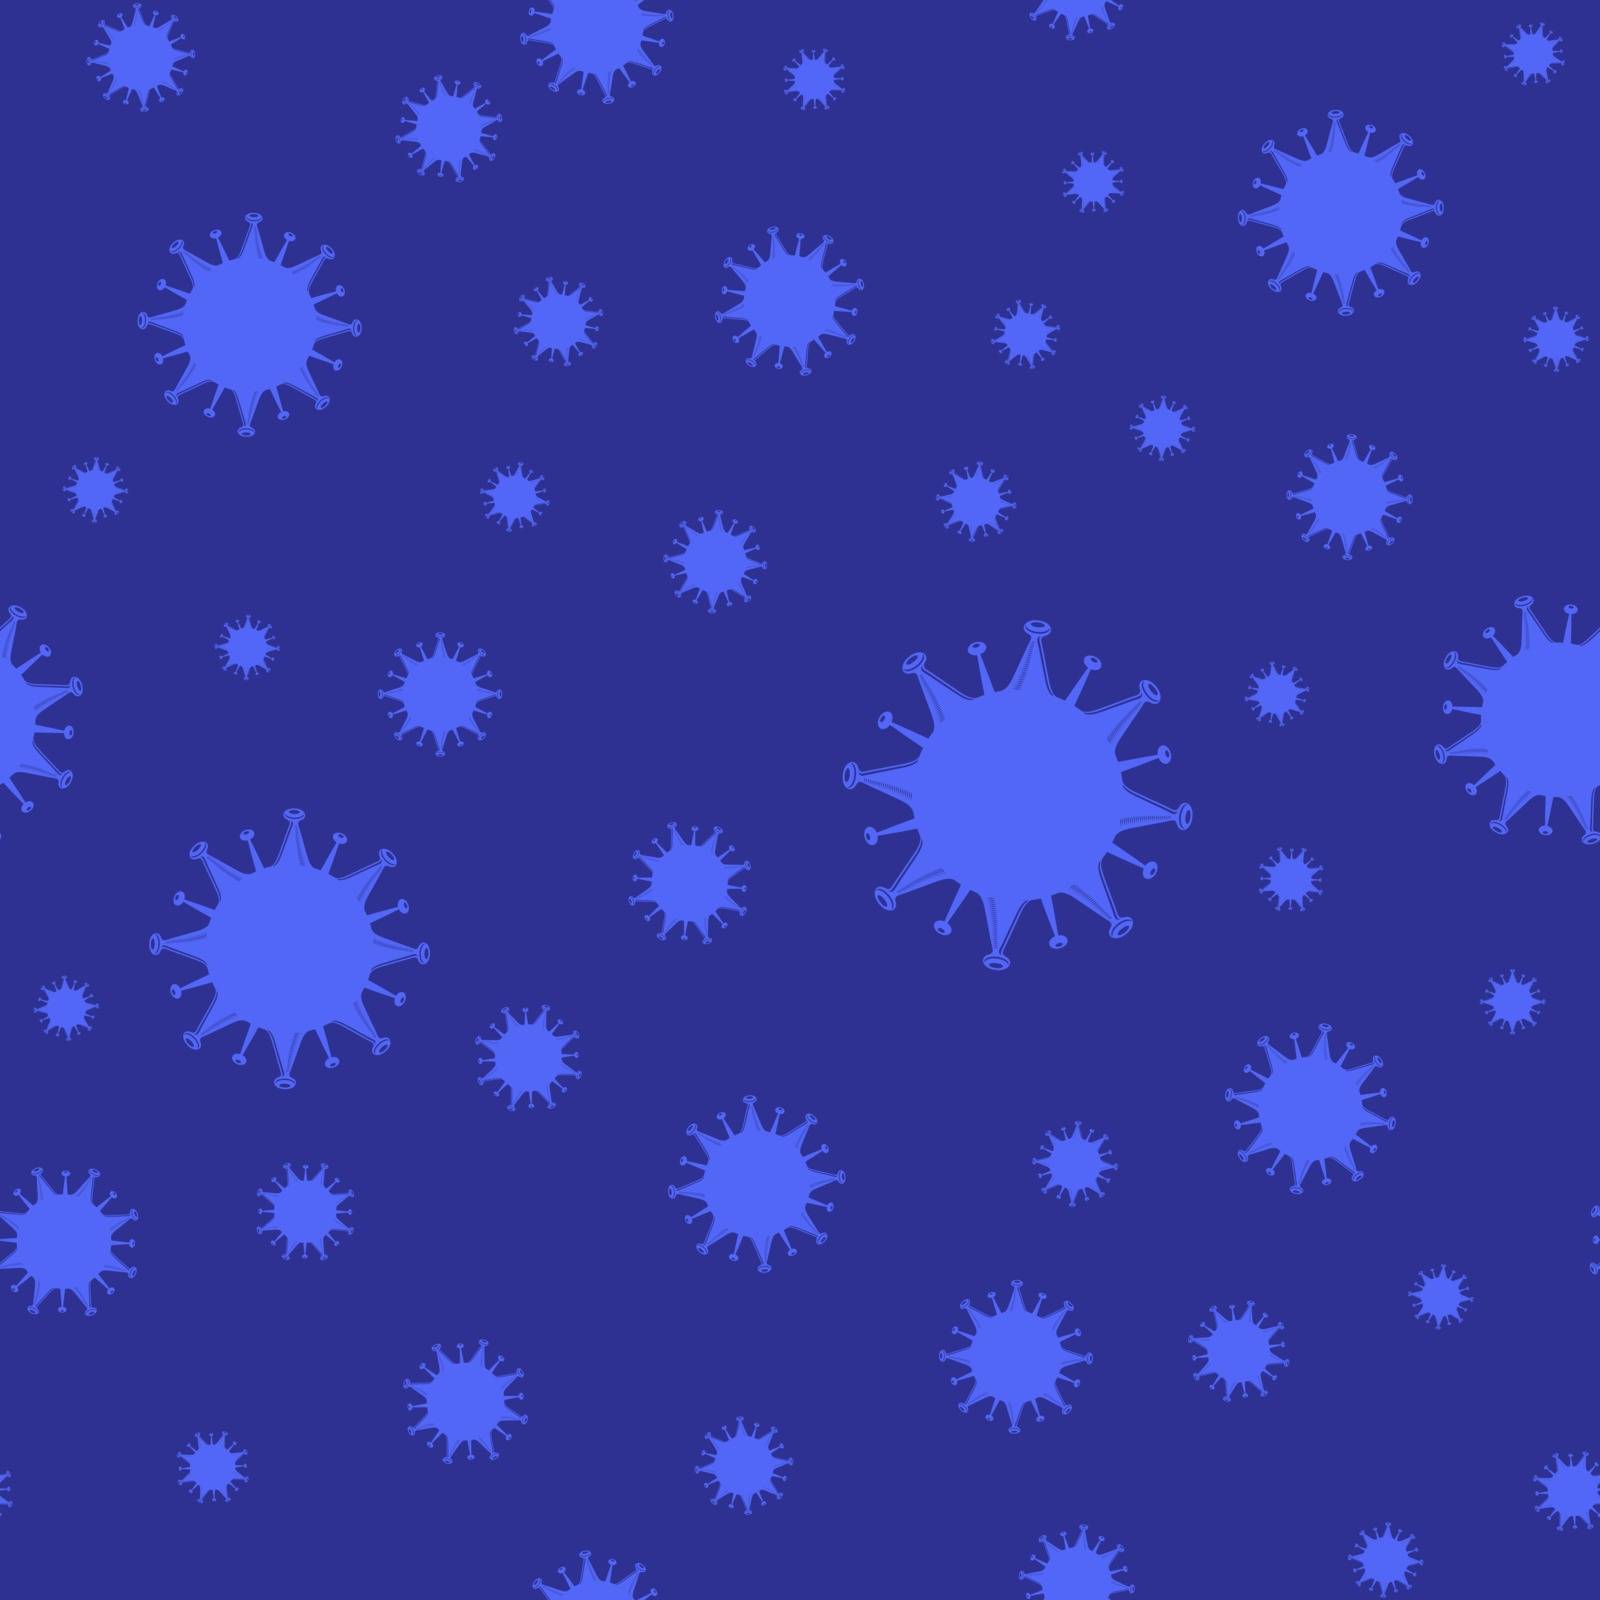 Stop Pandemic Novel Coronavirus Sign Isolated on Blue Background. Seamless Pattern.